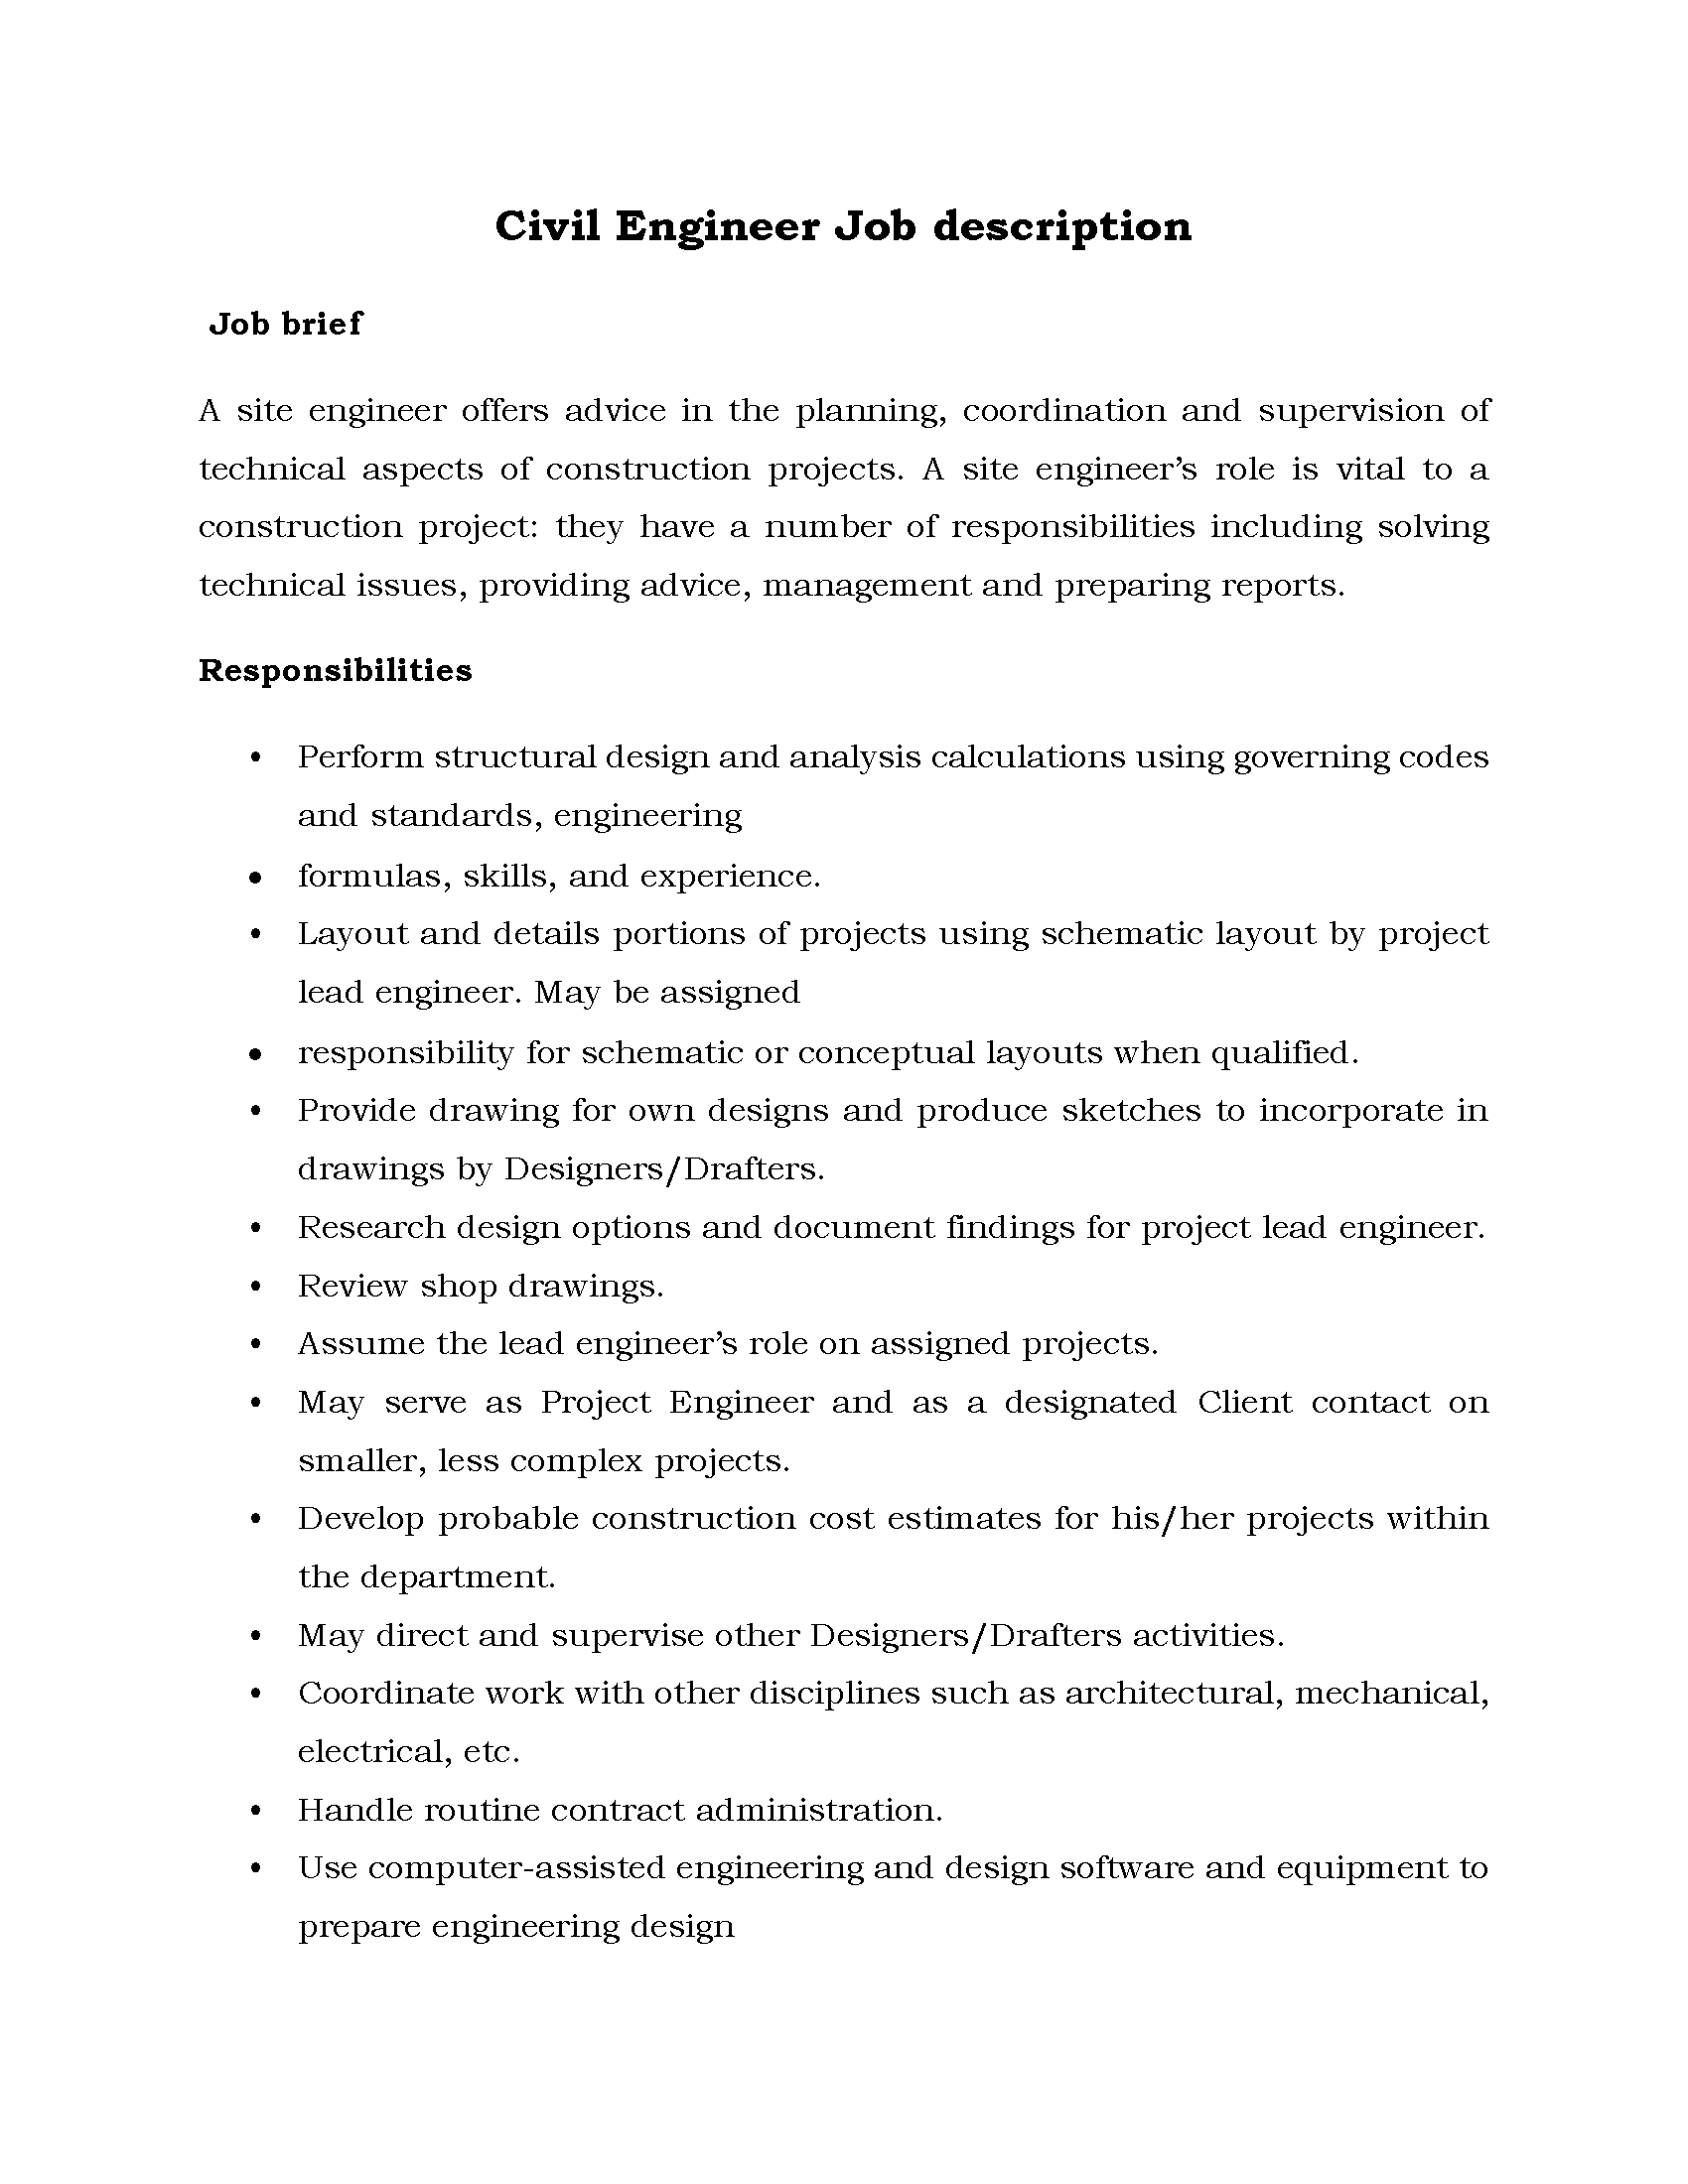 18-Civil Engineer Job description